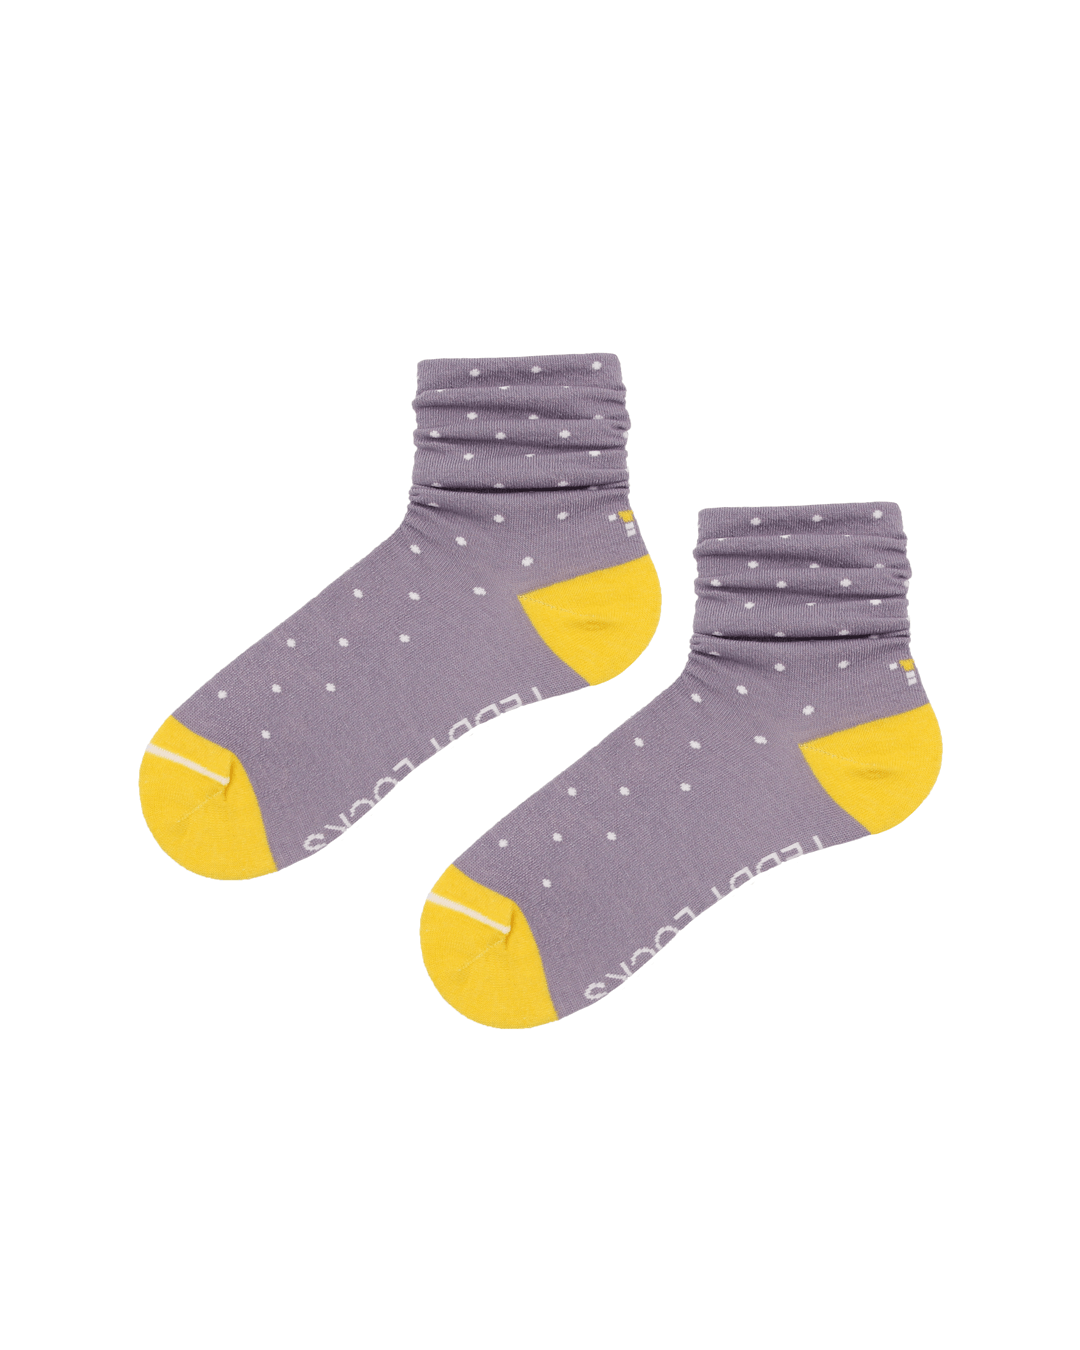 Sustainable socks. Lilac polka dot socks with yellow toes.